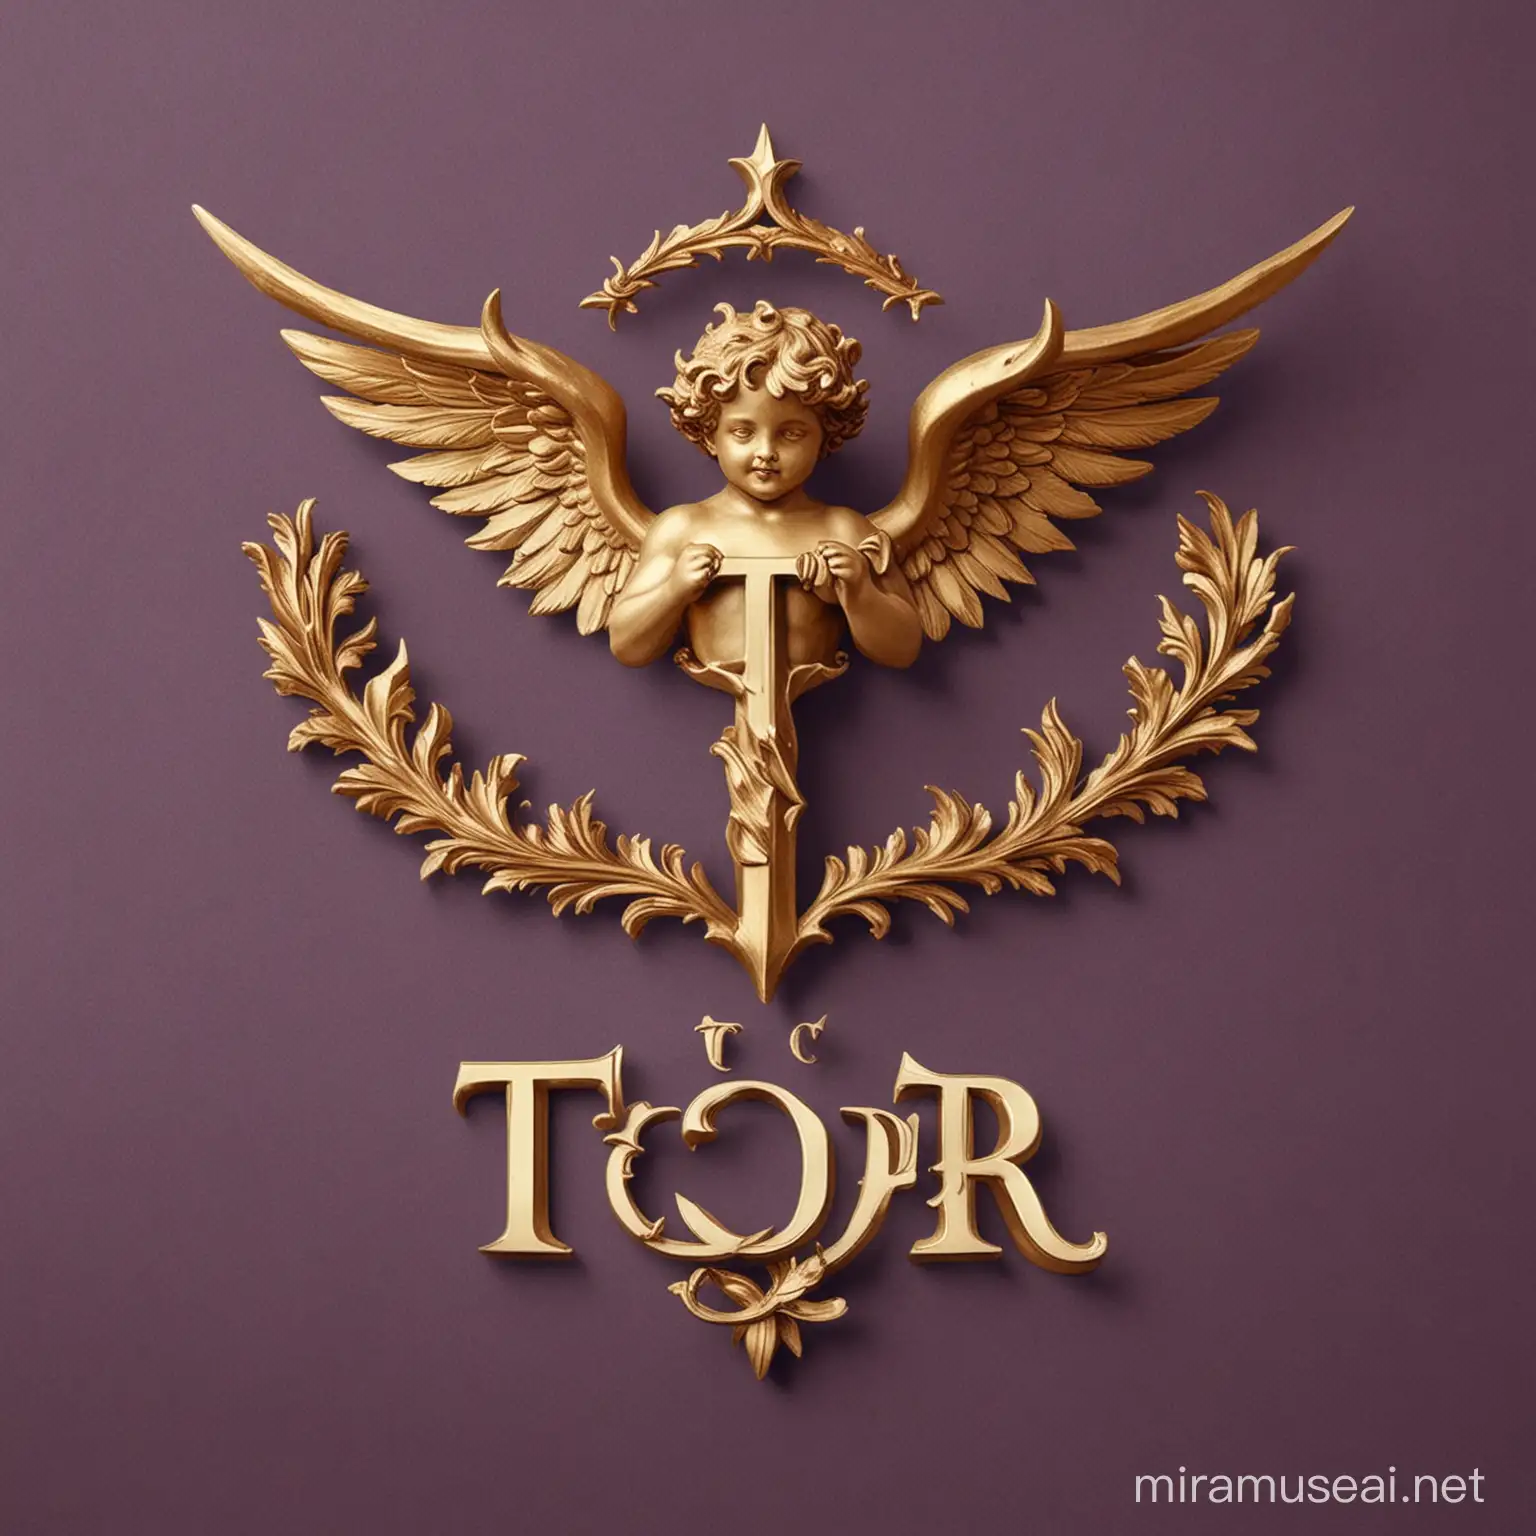 Classic Tcor Logo Design with CherubInspired Elements on Plum Background